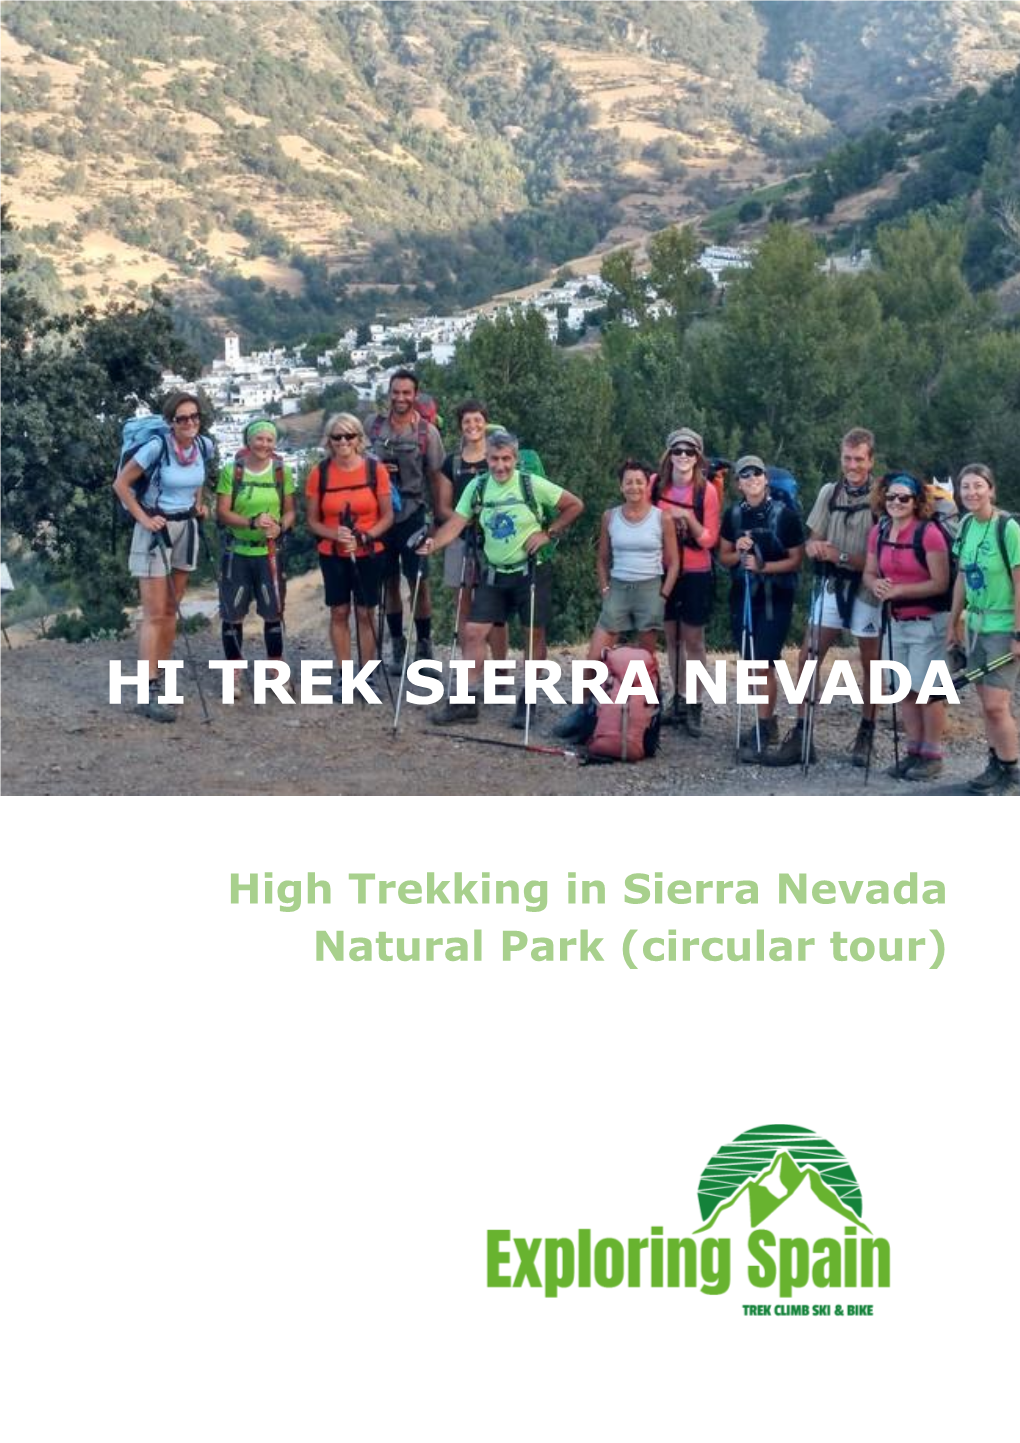 Hi Trek Sierra Nevada